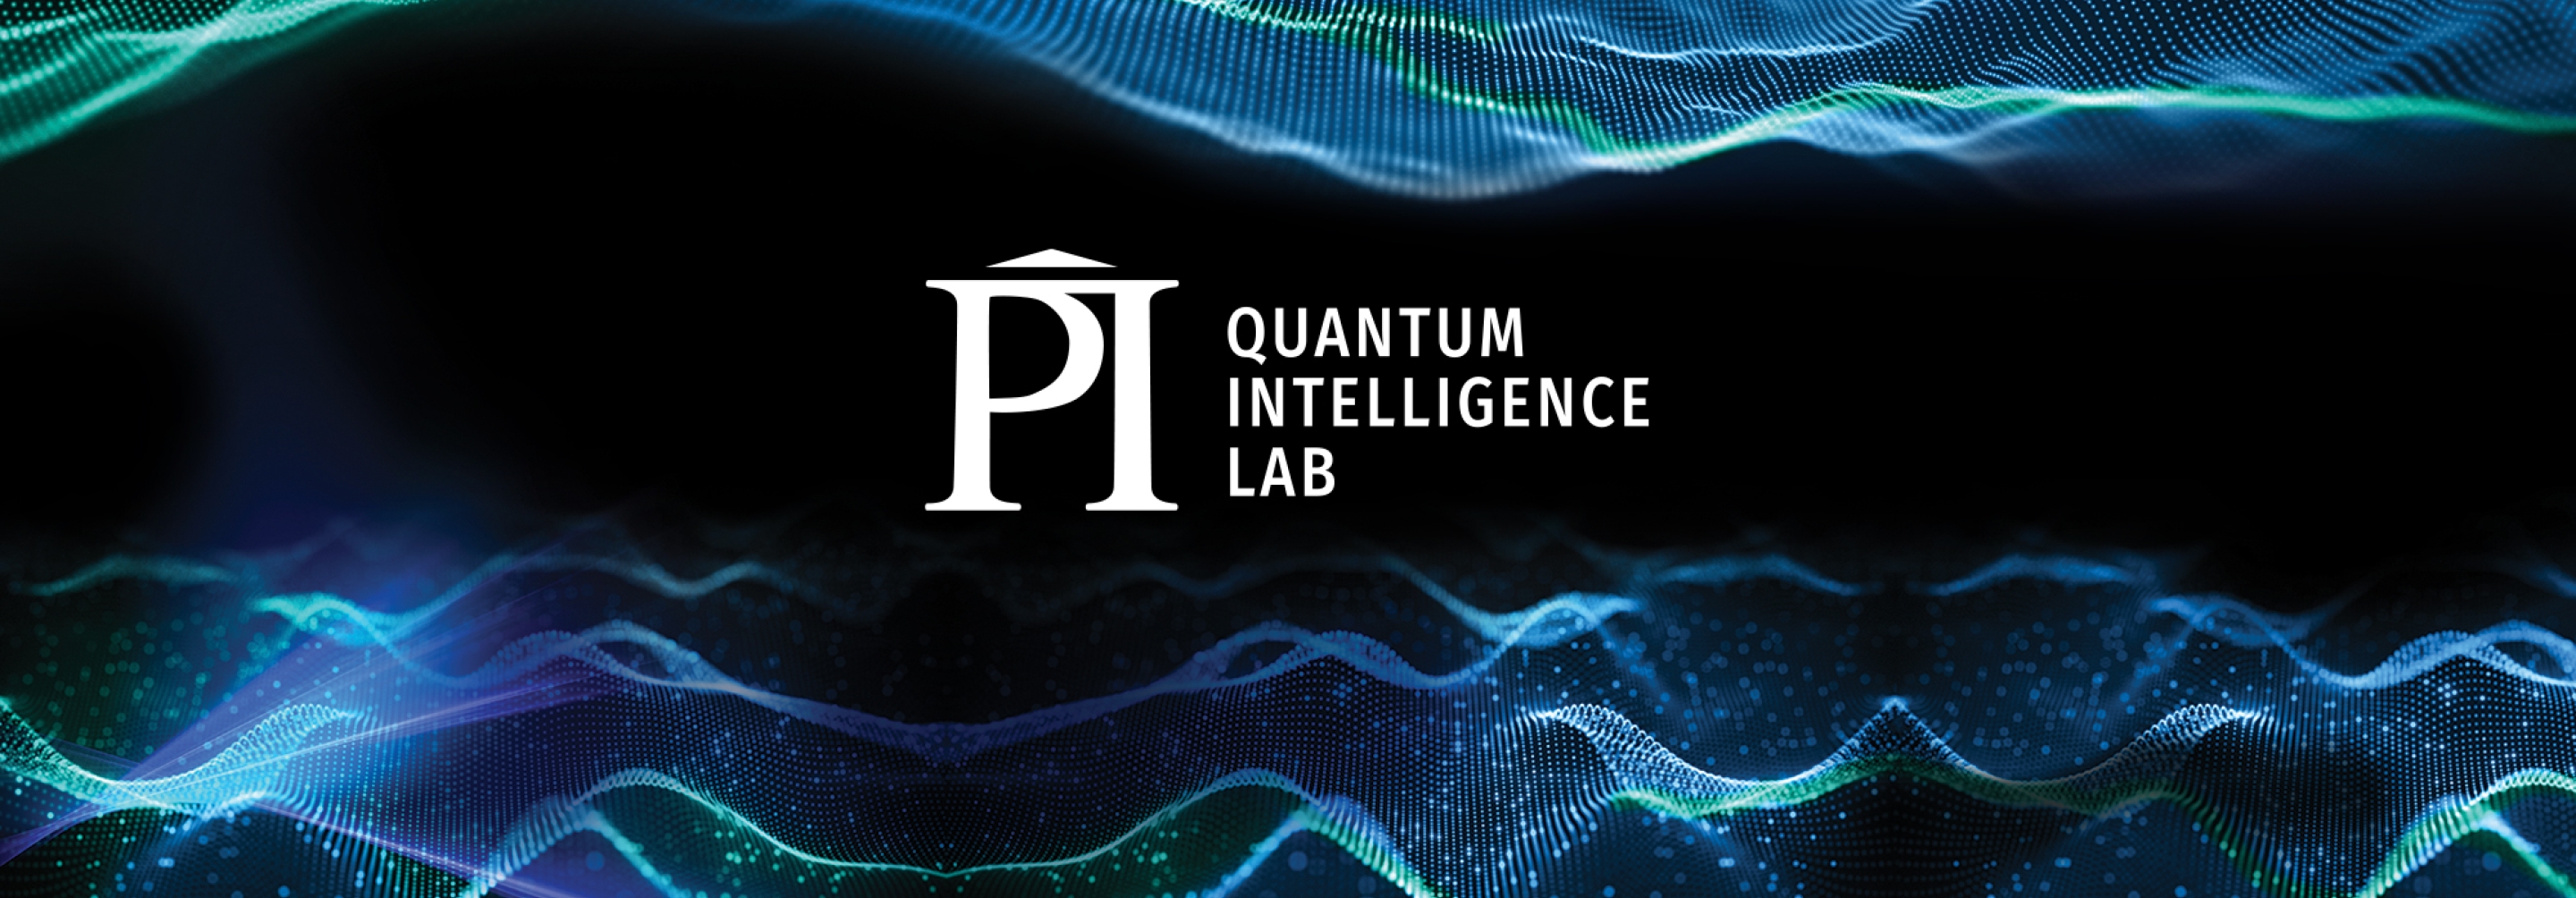 Quantum waves with PI Quantum Intelligence Lab logo on top